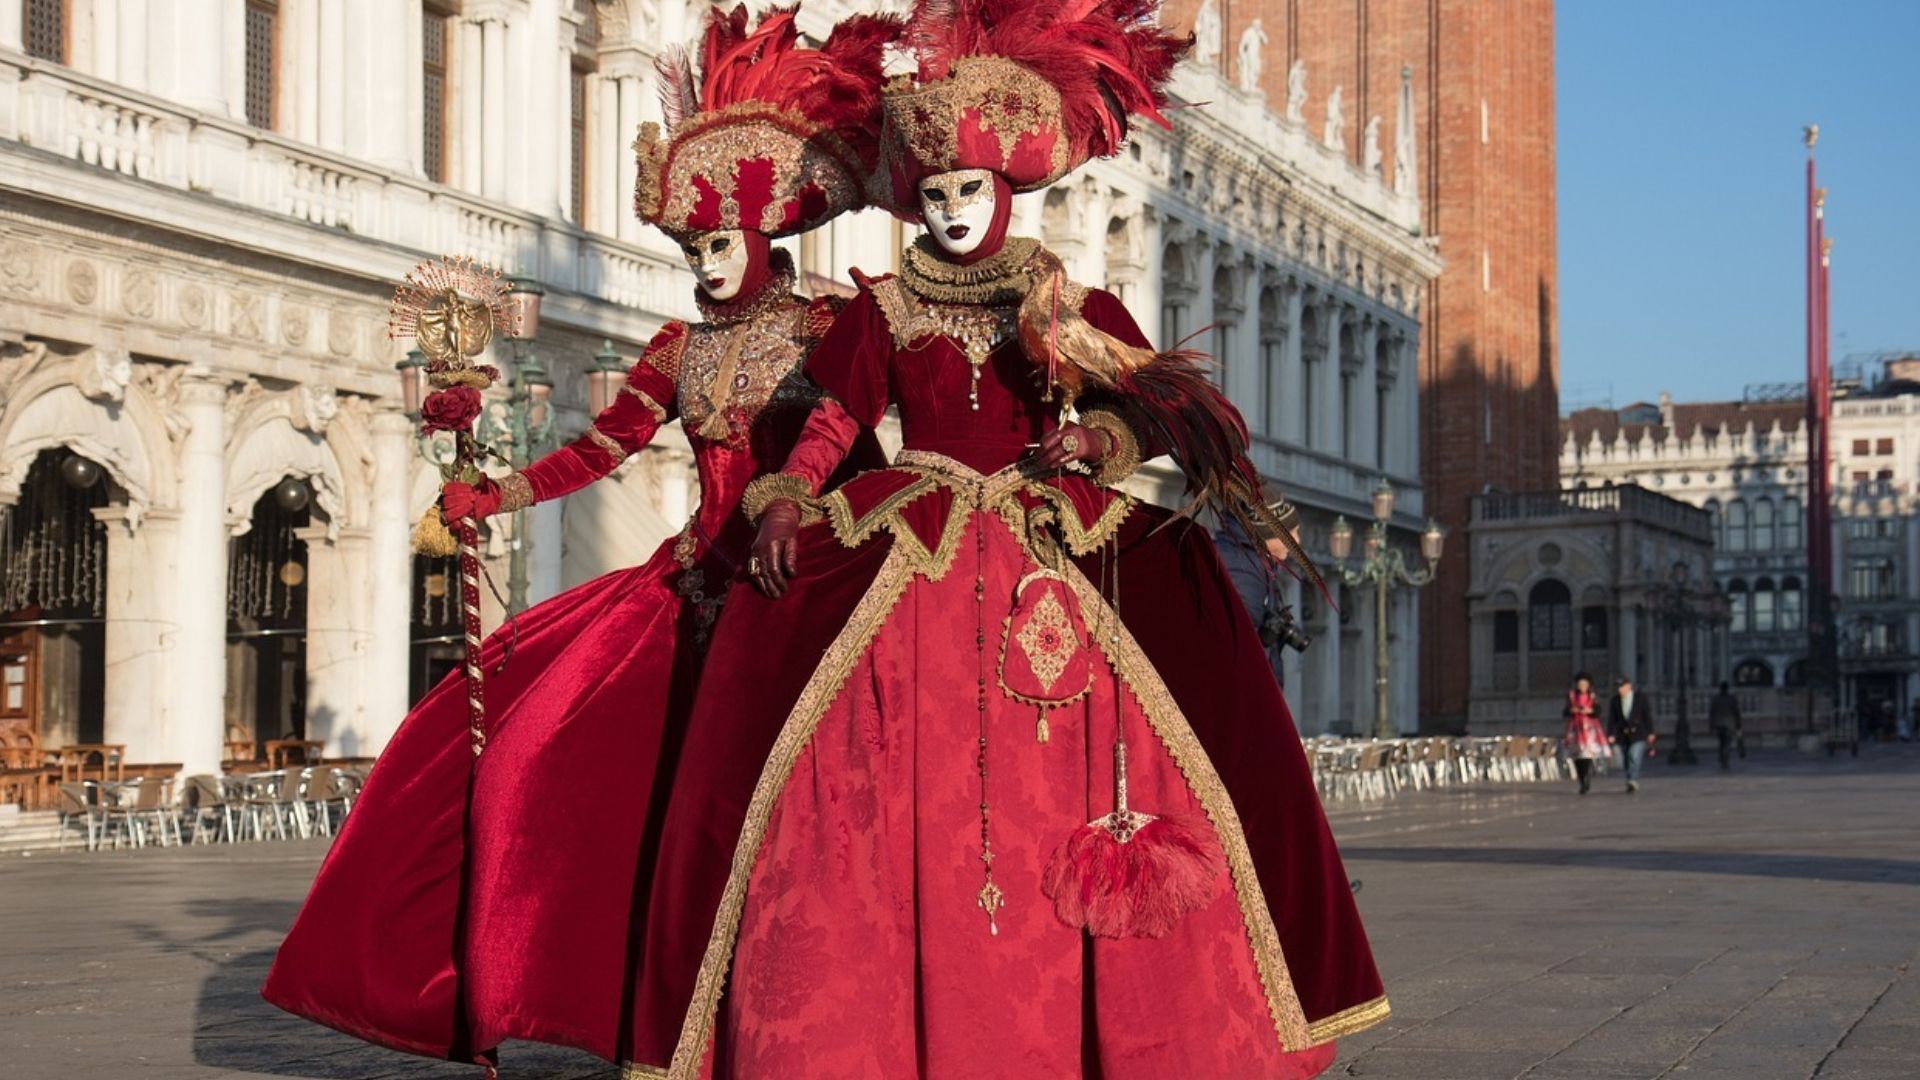 Carnevale di Venezia  (Venice Carnival)